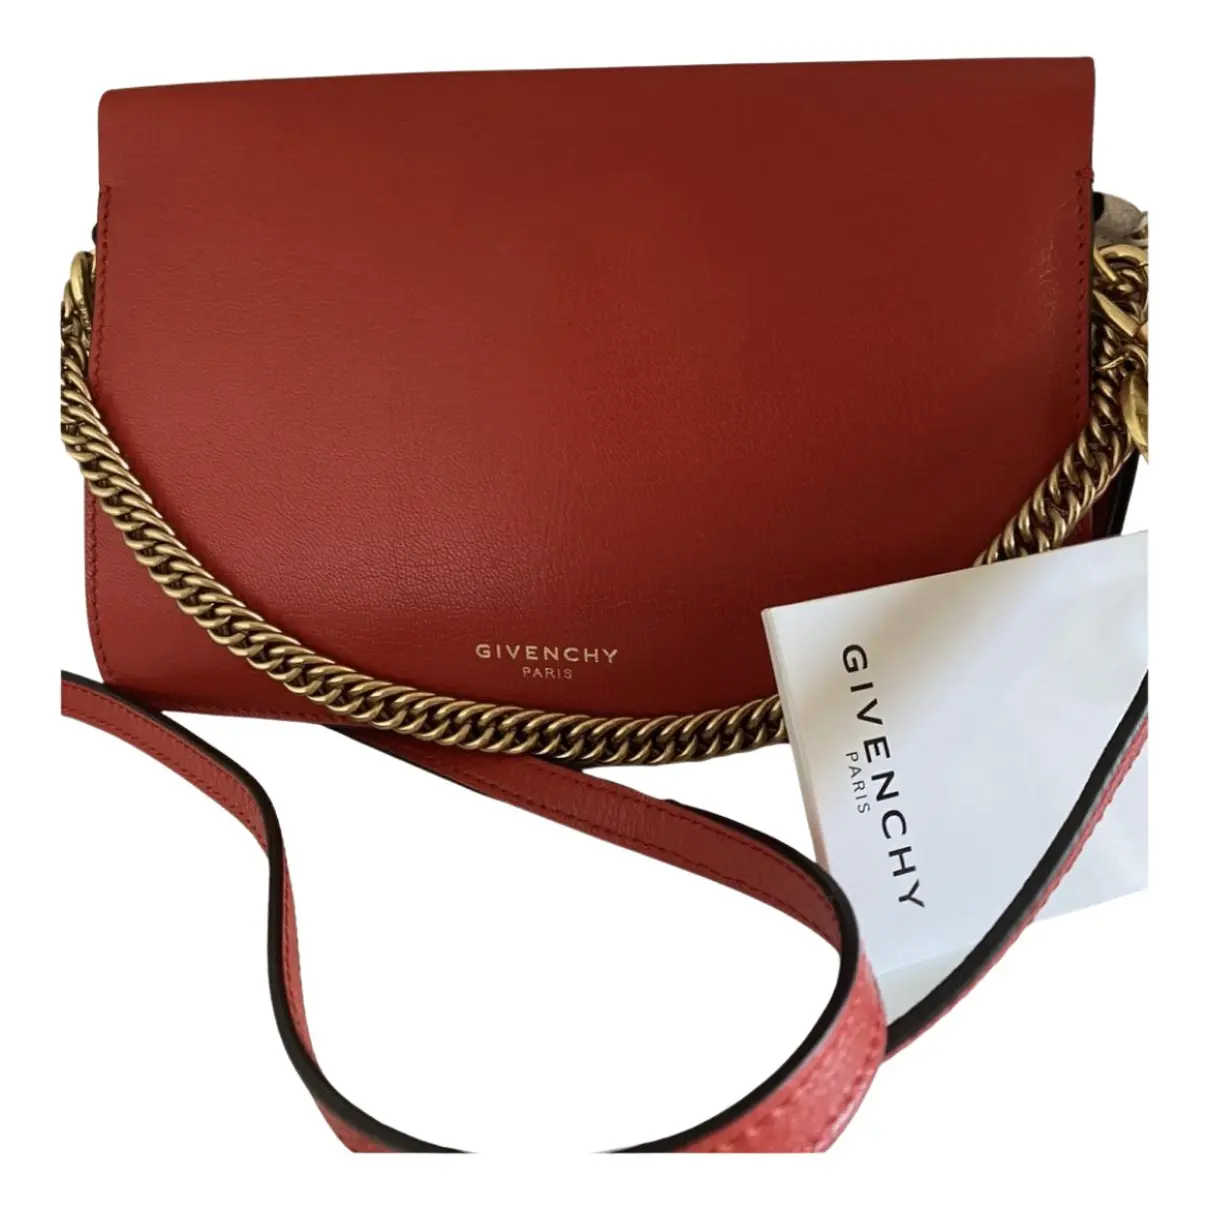 CROSS3 leather crossbody bag Givenchy